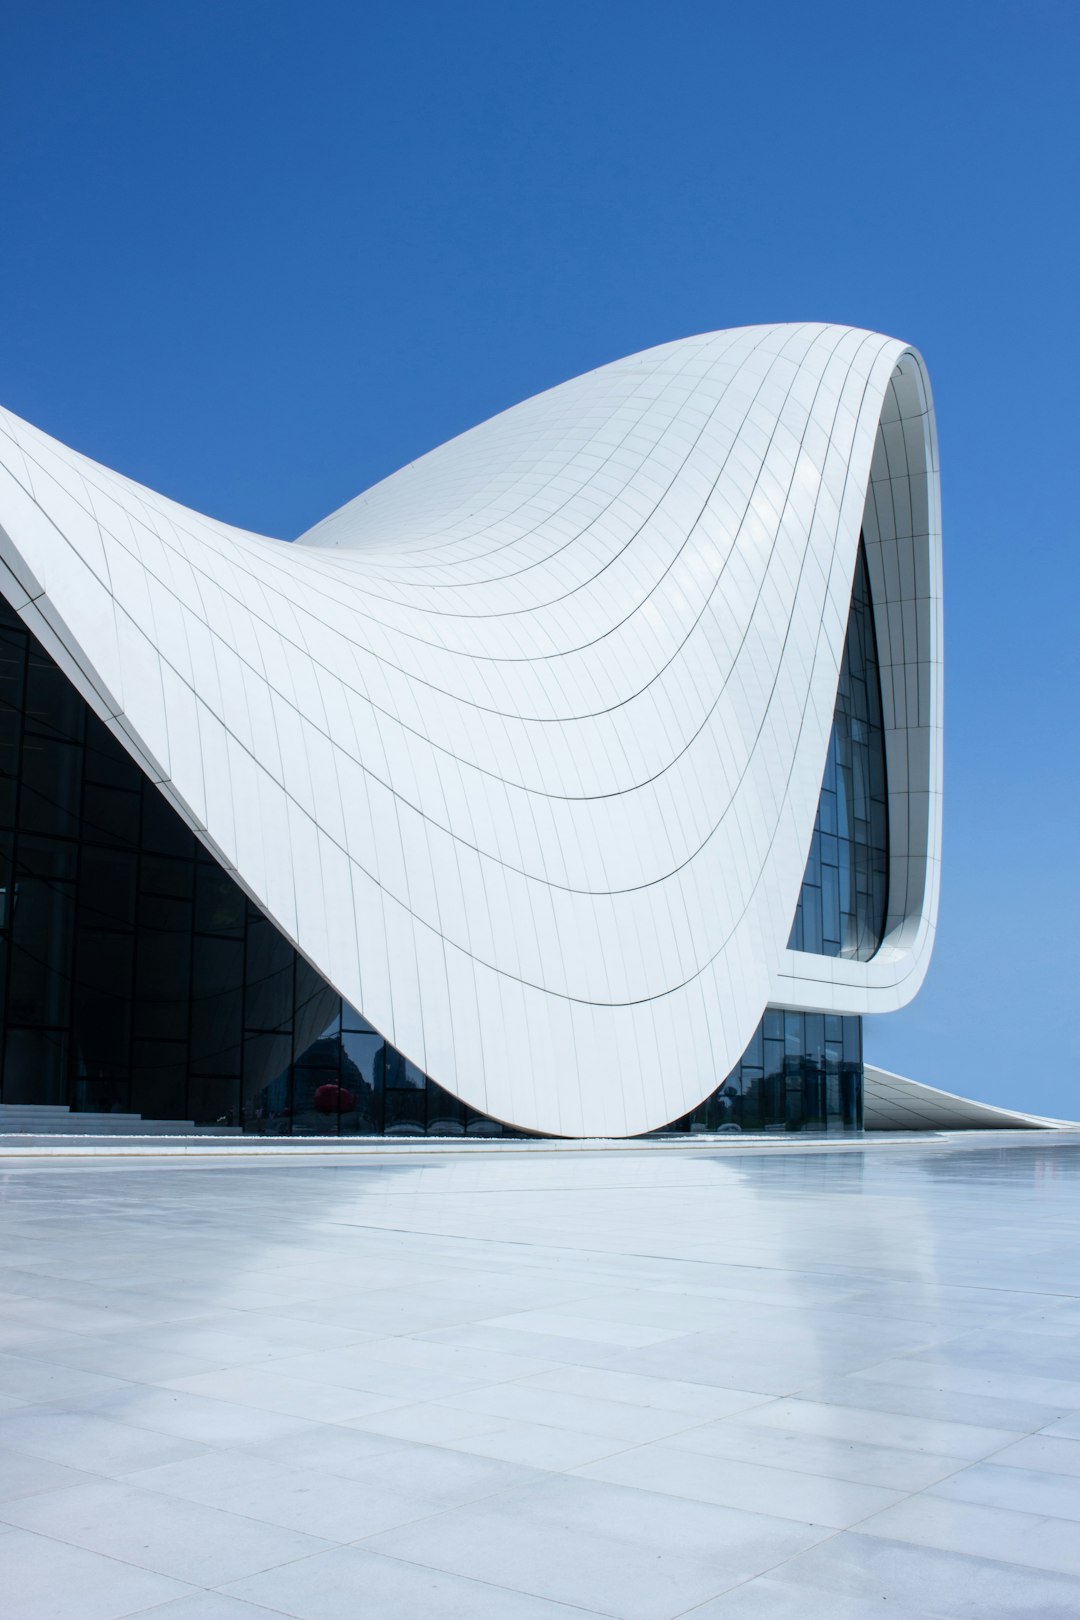 travelers stories about Architecture in Heydar Aliyev Centre, Azerbaijan